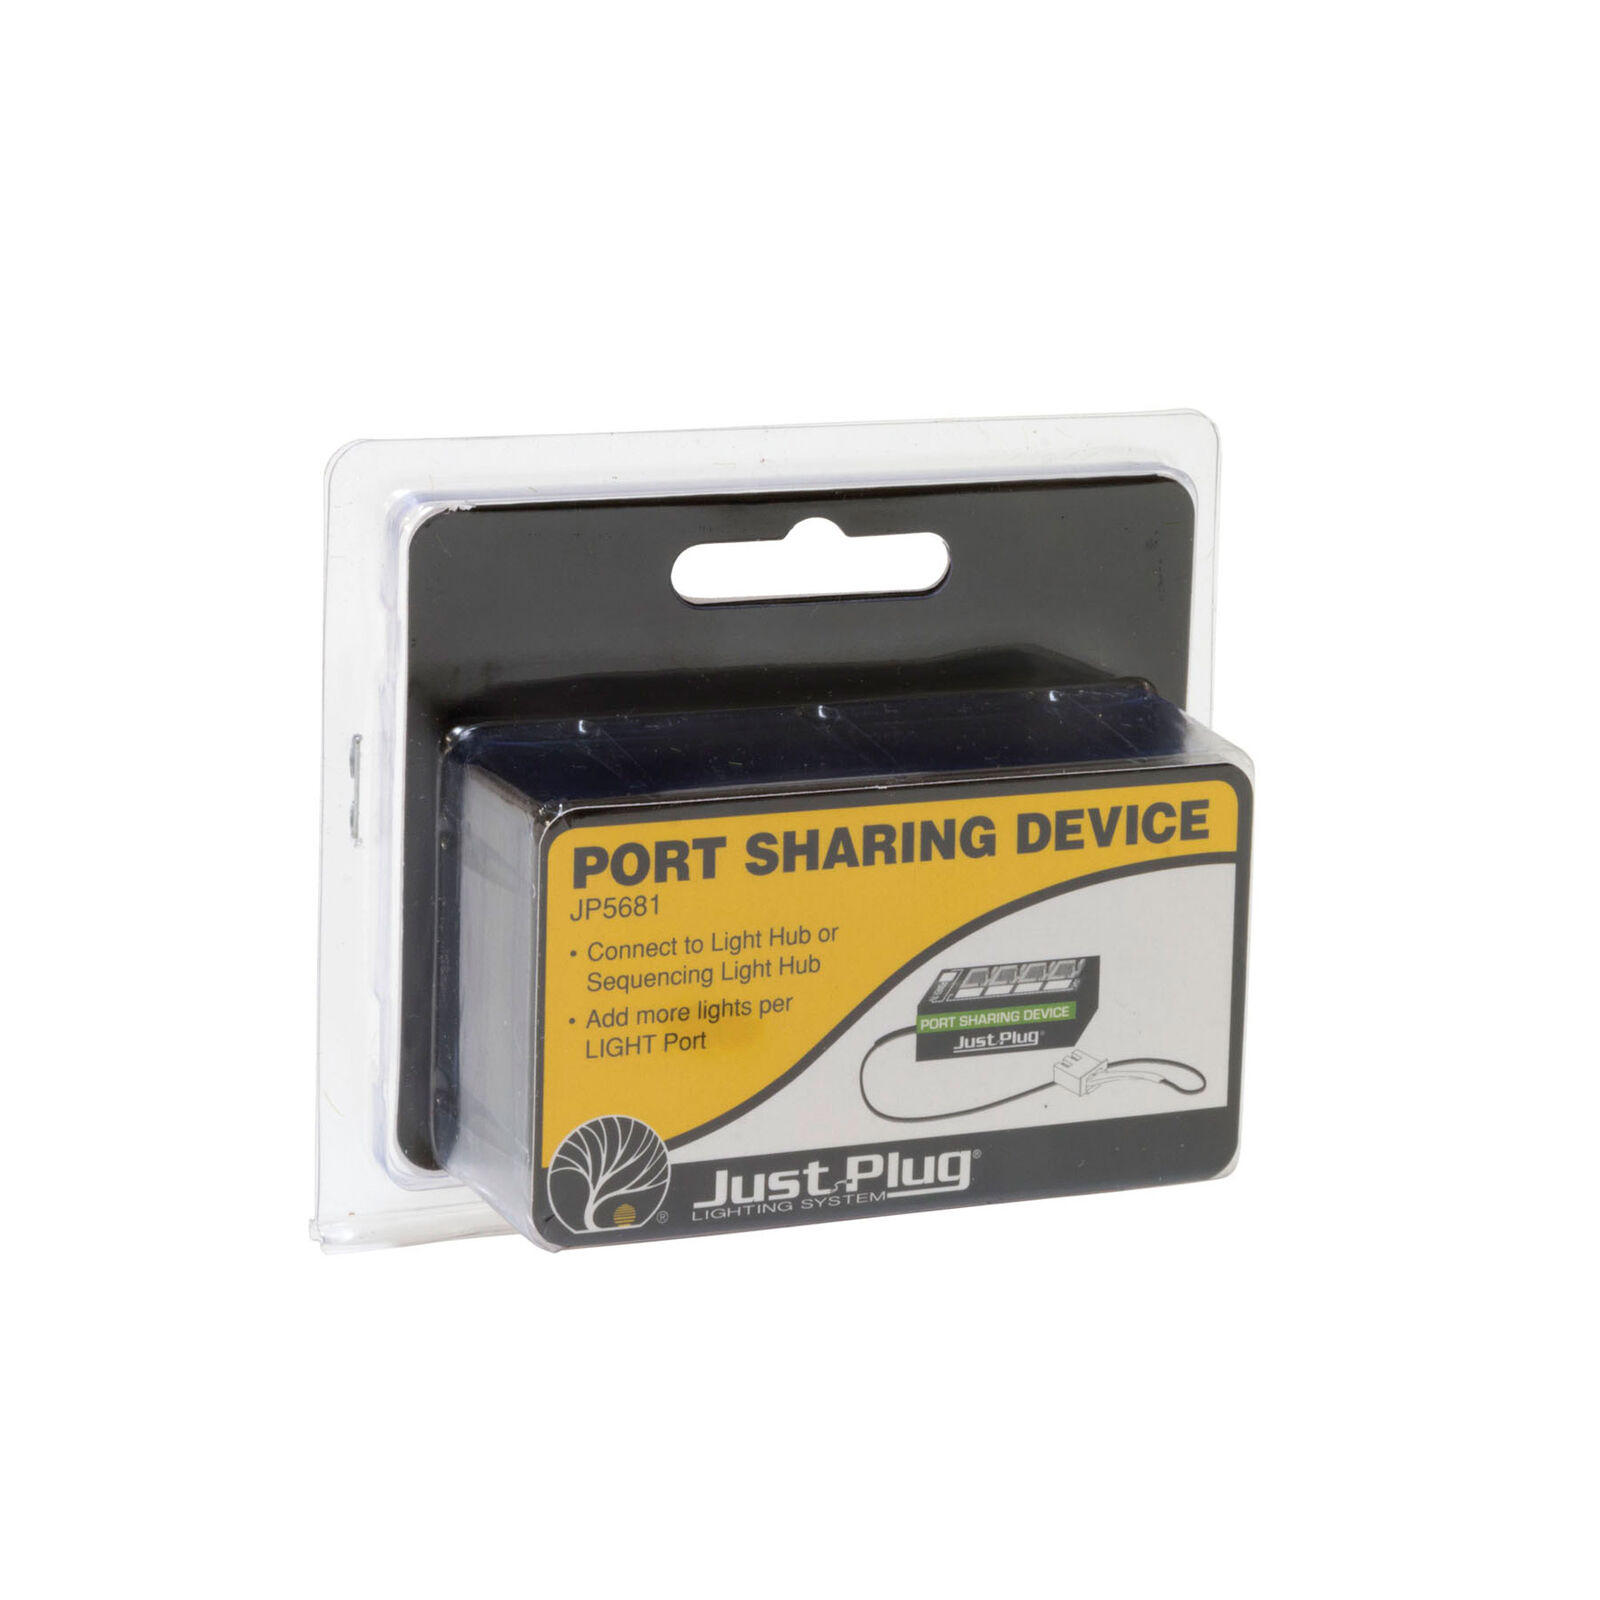 Port Sharing Device